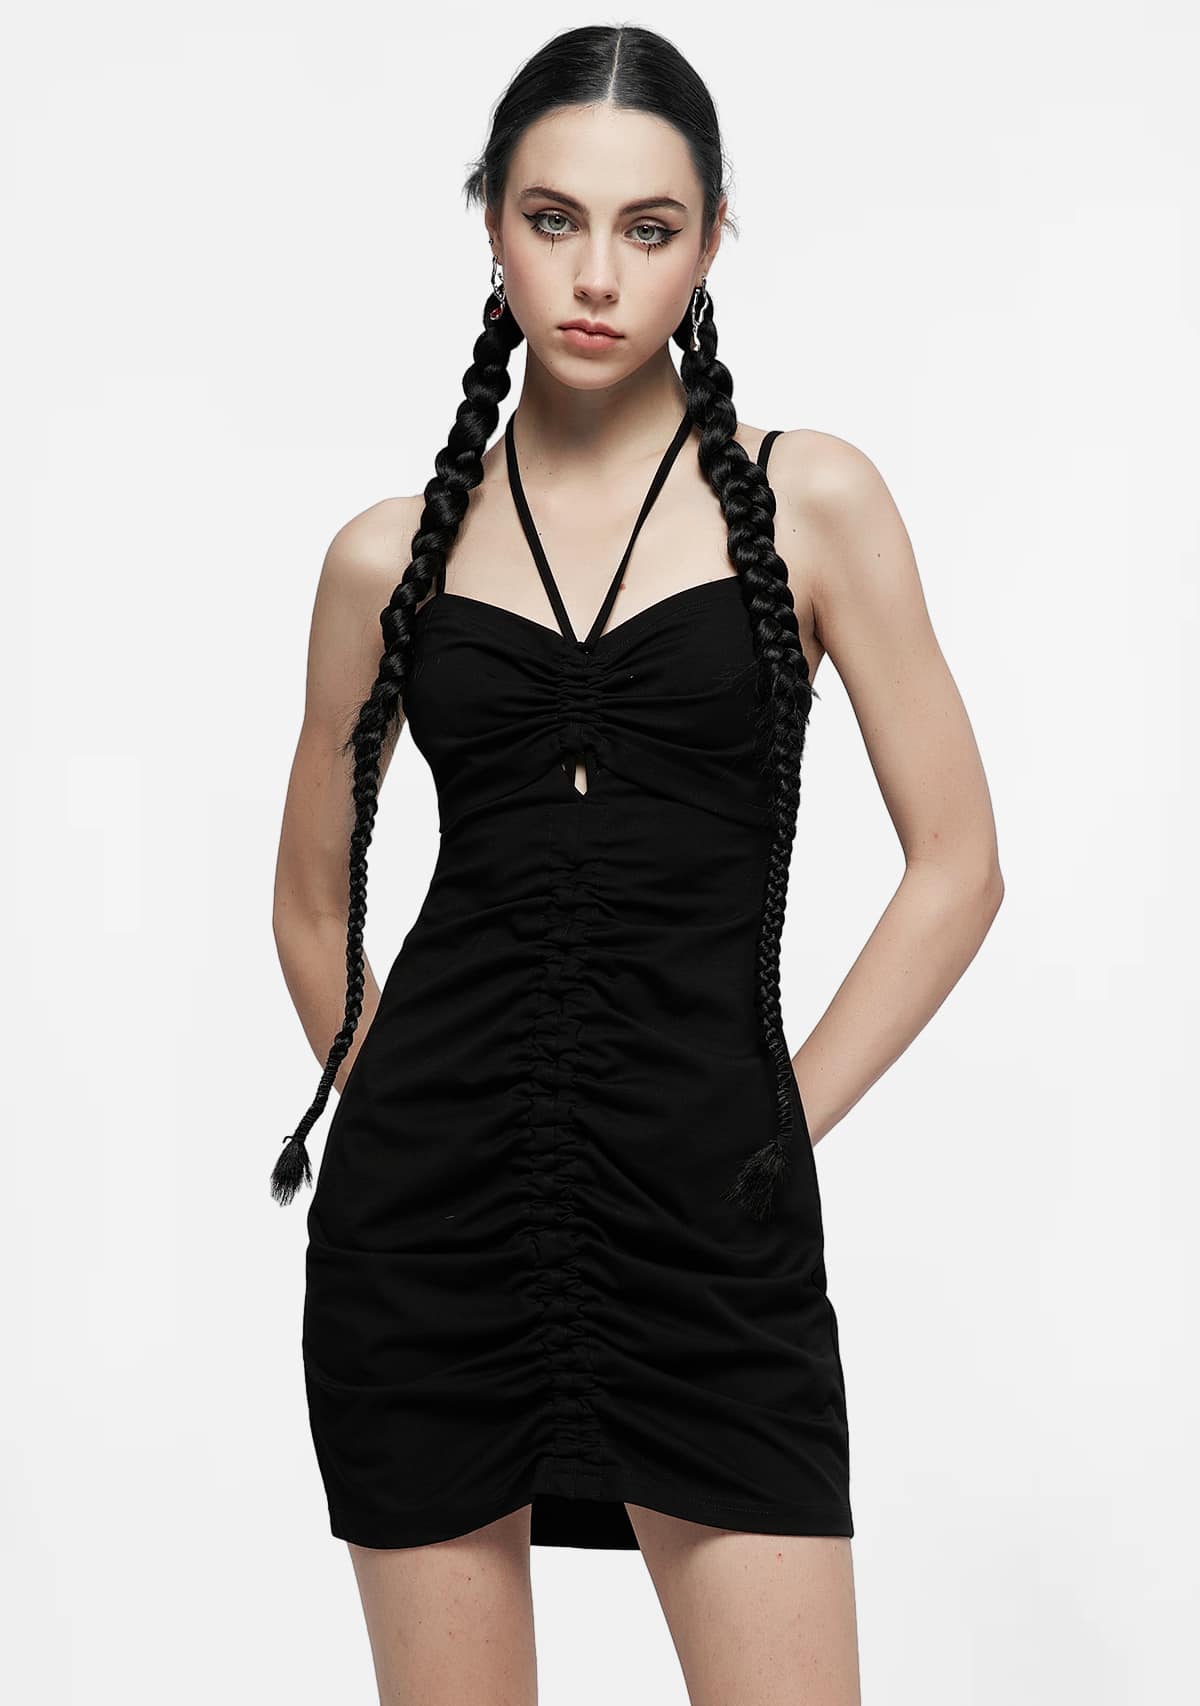 Chic Black Gothic Cocktail Dress